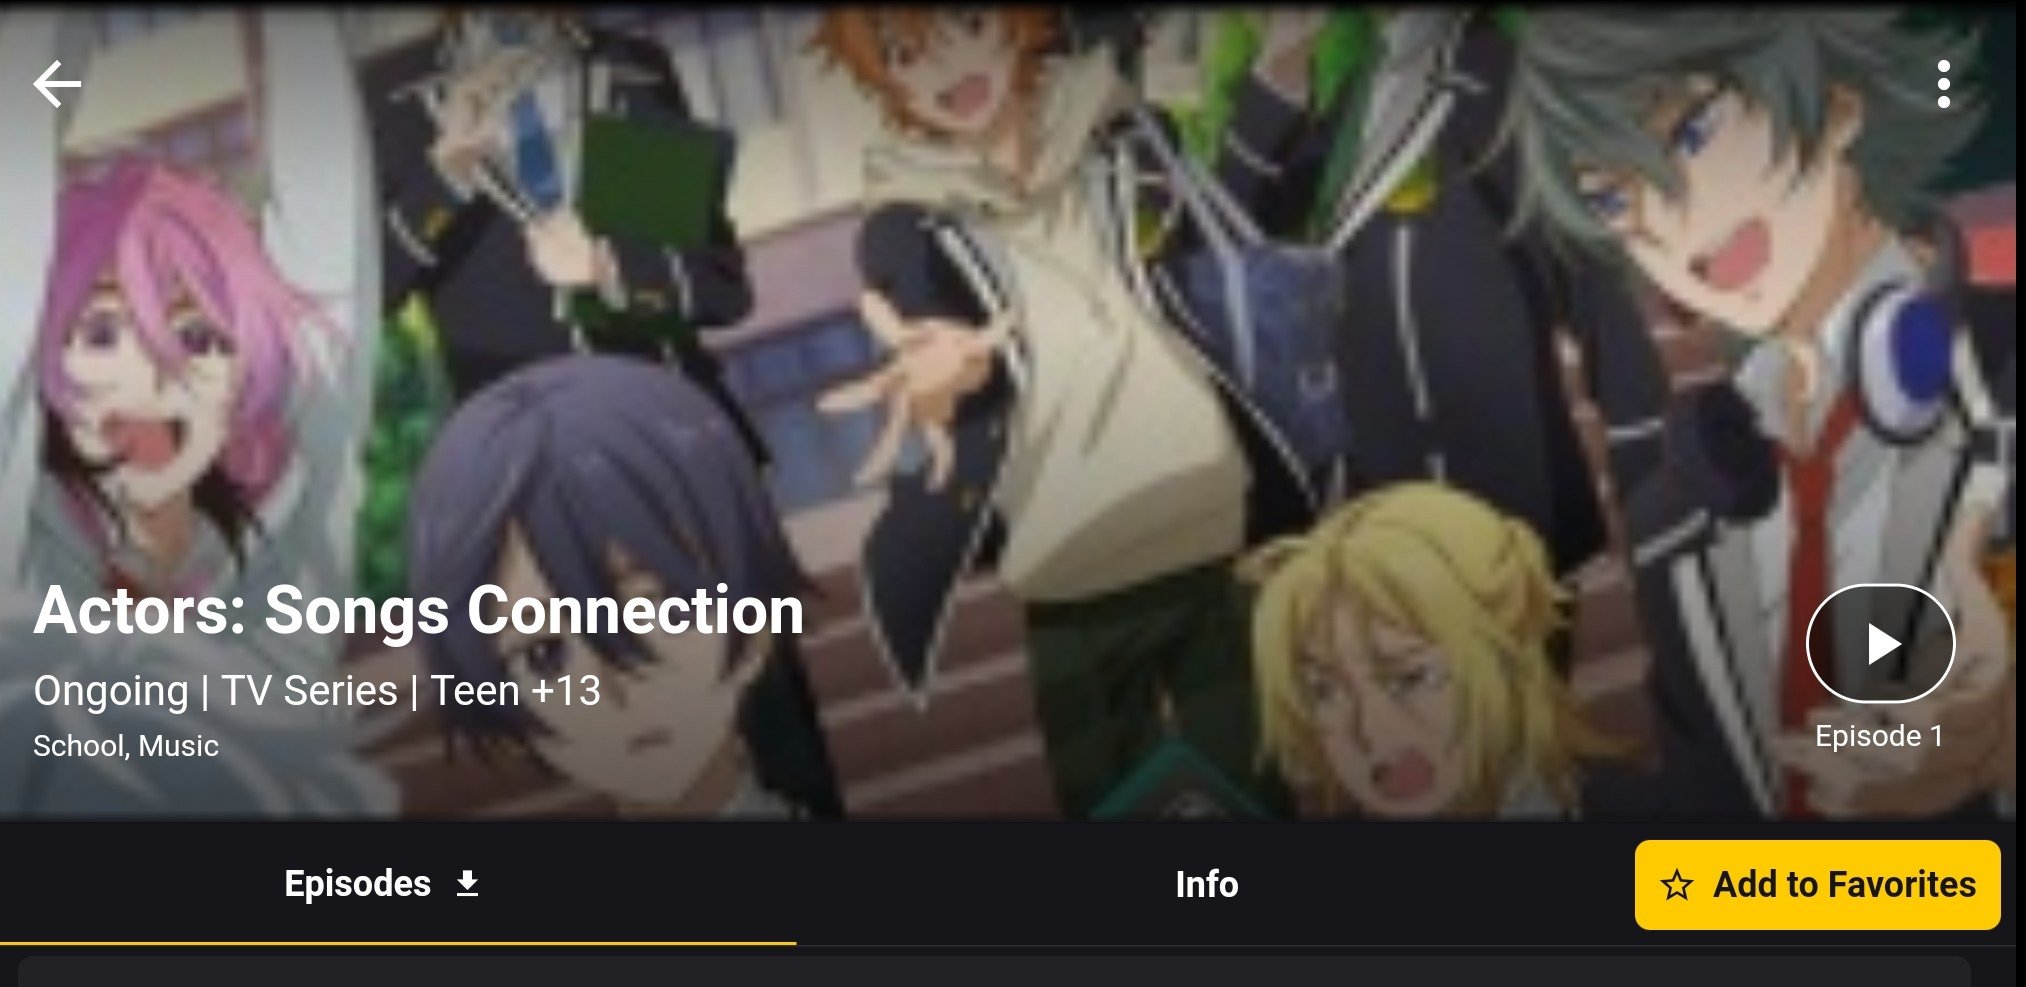 download anime episodes free